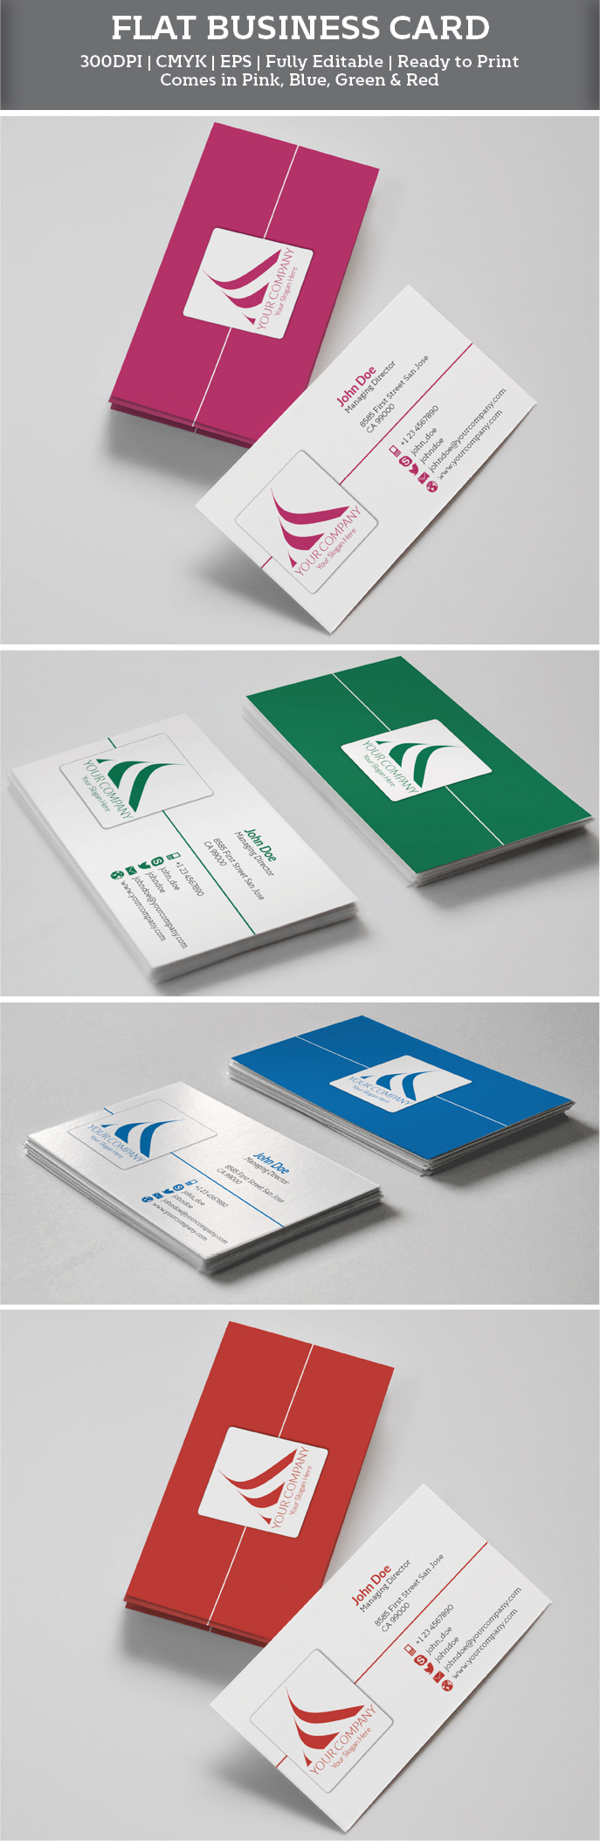 Flat Corporate Business Card Template illustrator Vector 1